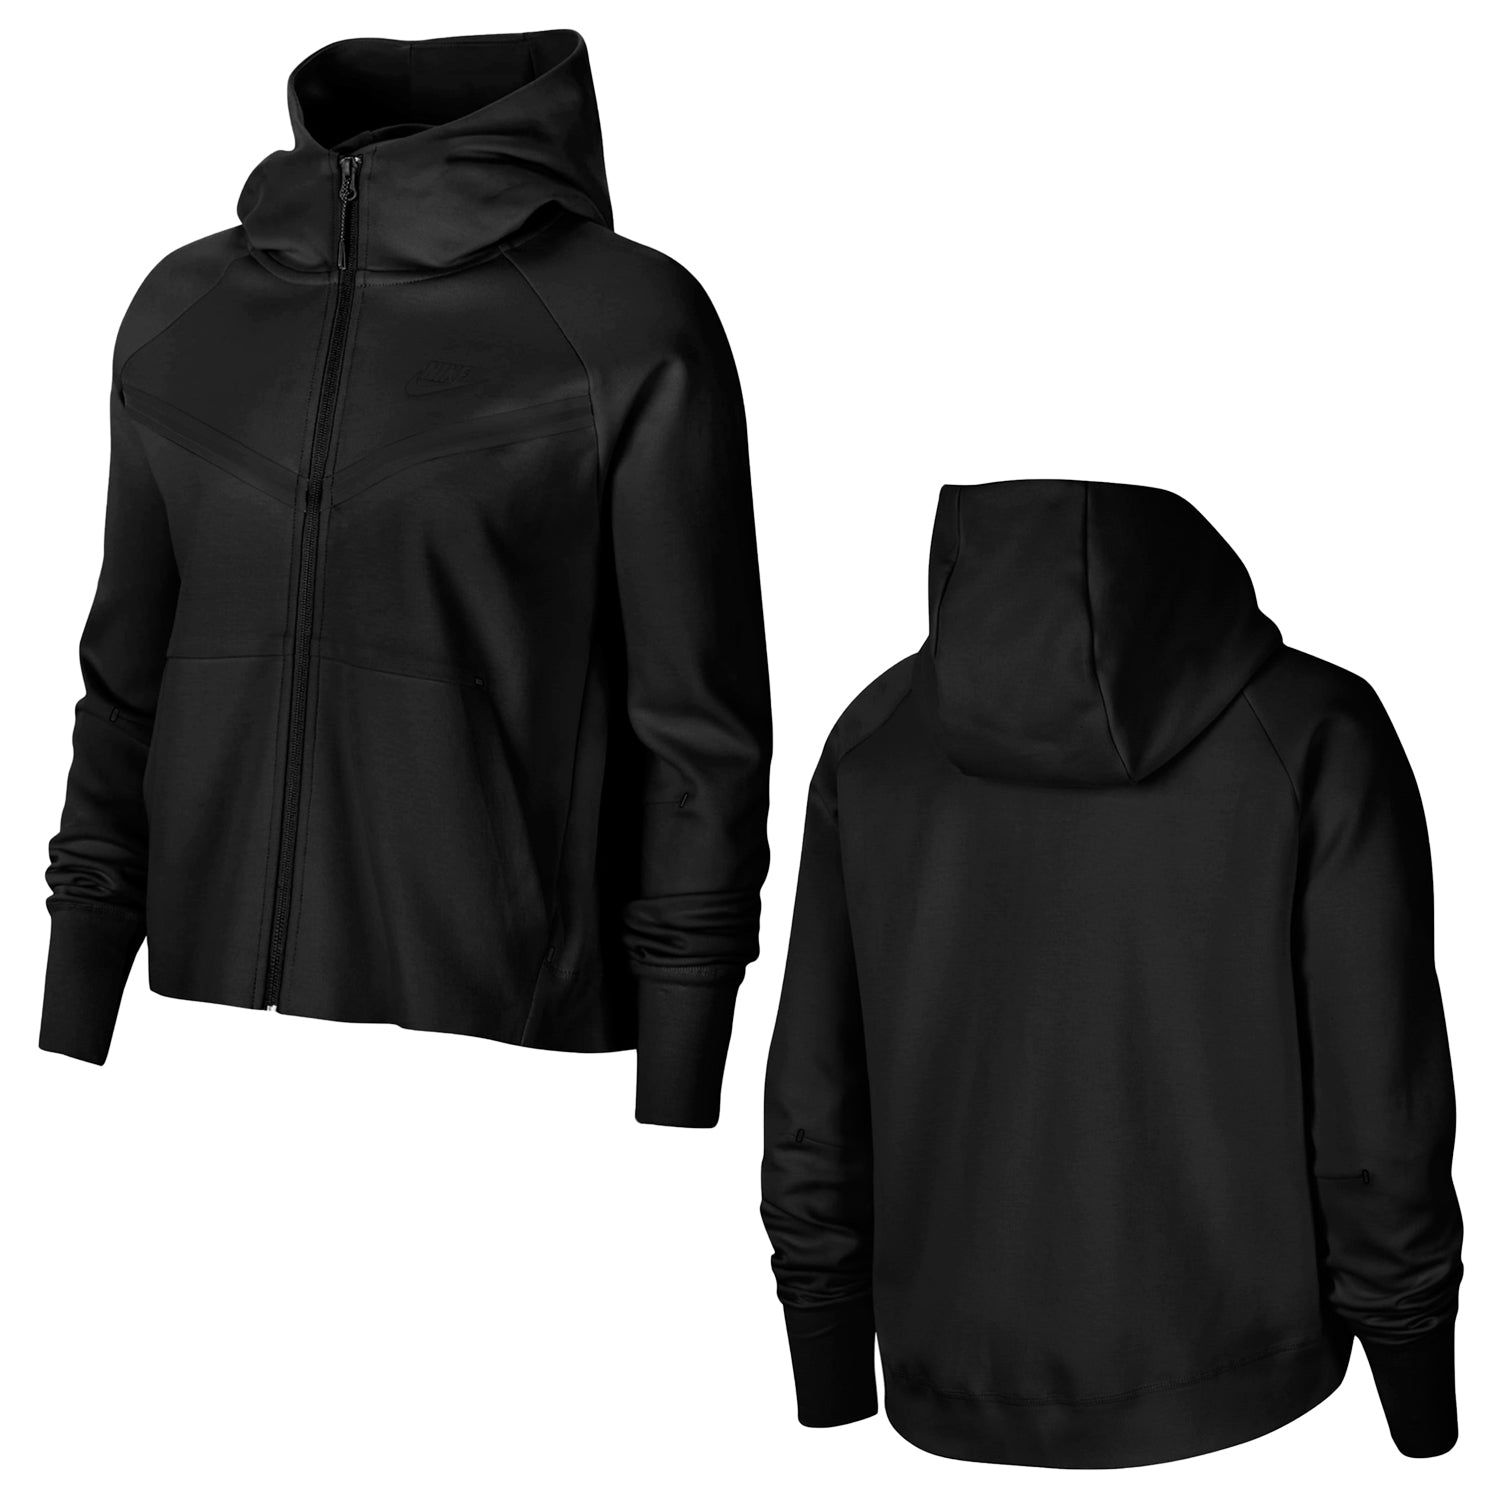 Nike Women's Tech Fleece Windrunner Full Zip Hoodie Black